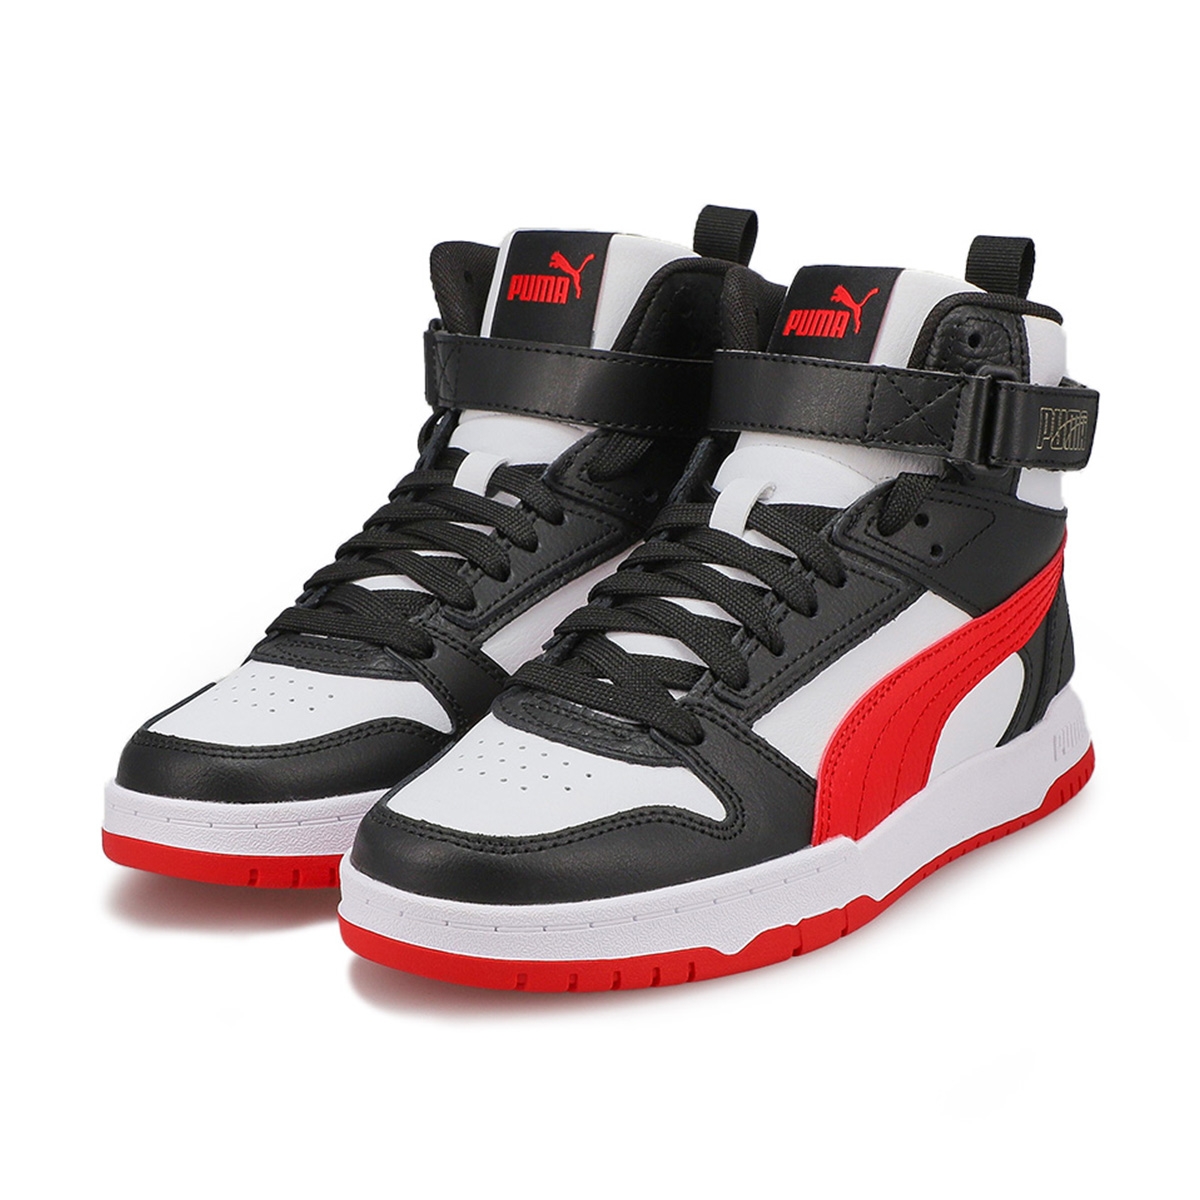 Kids' RBD Game Jr High Top Sneaker - White/Black/Red